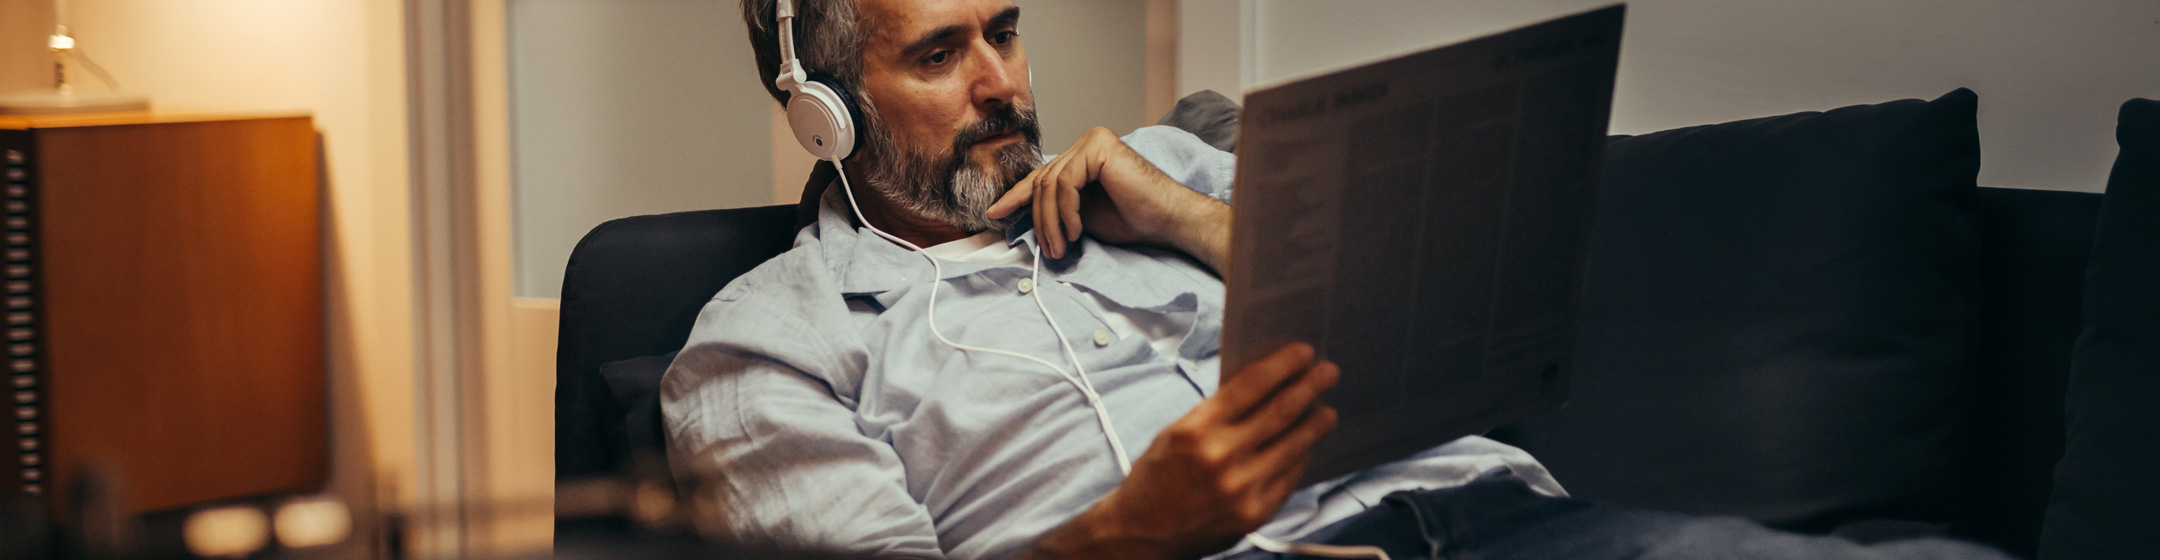 Pic showing a man reclining on a sofa listening to a vinyl album through headphones